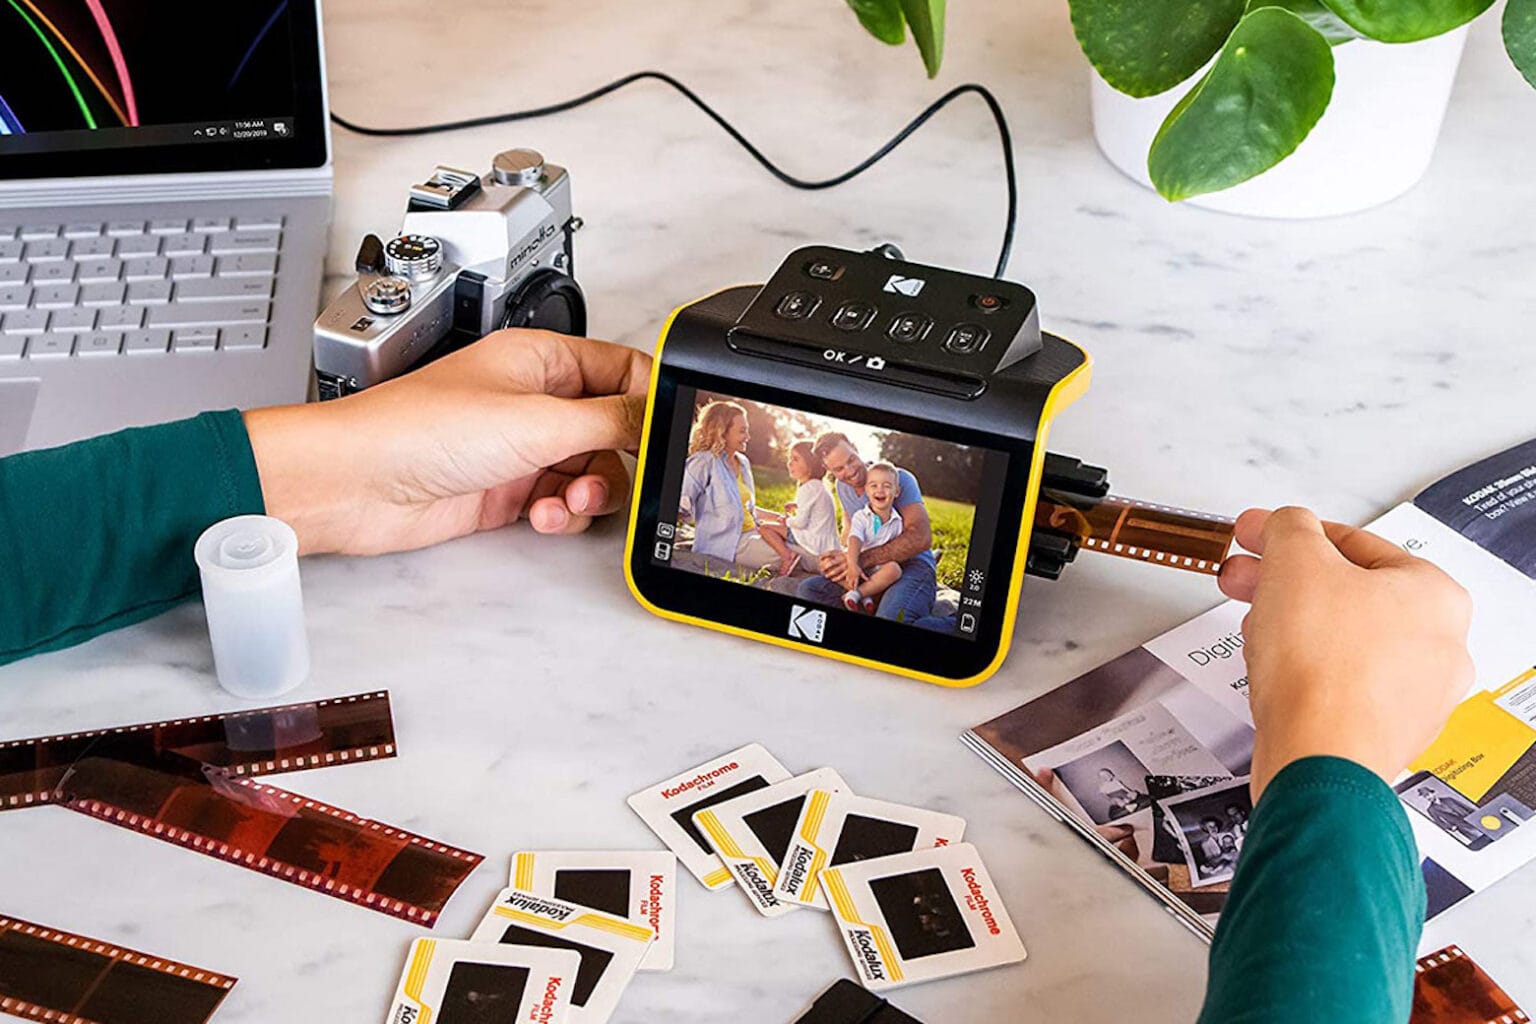 Preserve photographic memories with the Kodak Slide N Scan scanner.